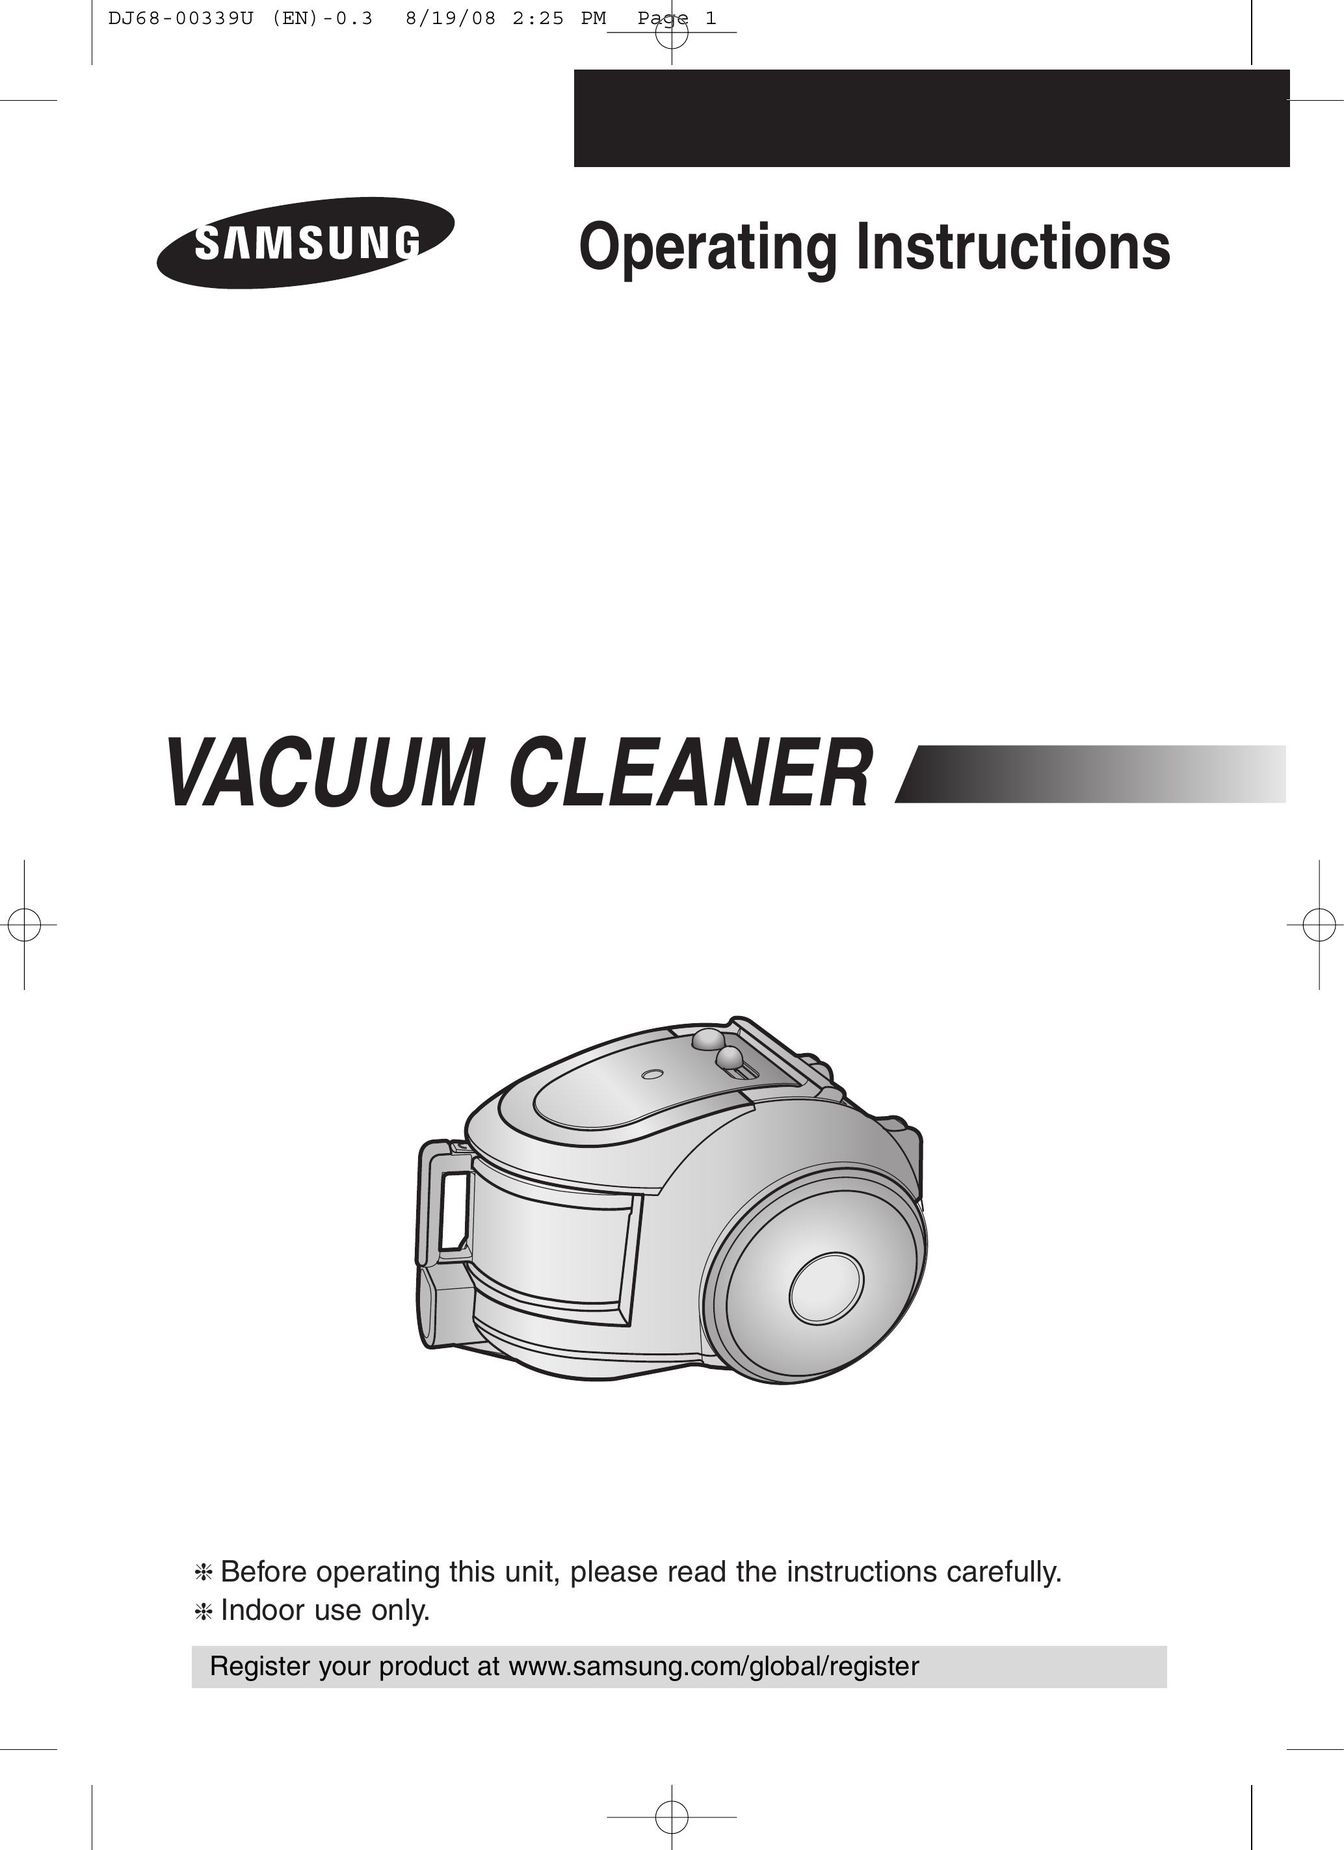 Samsung DJ68-00339U Vacuum Cleaner User Manual